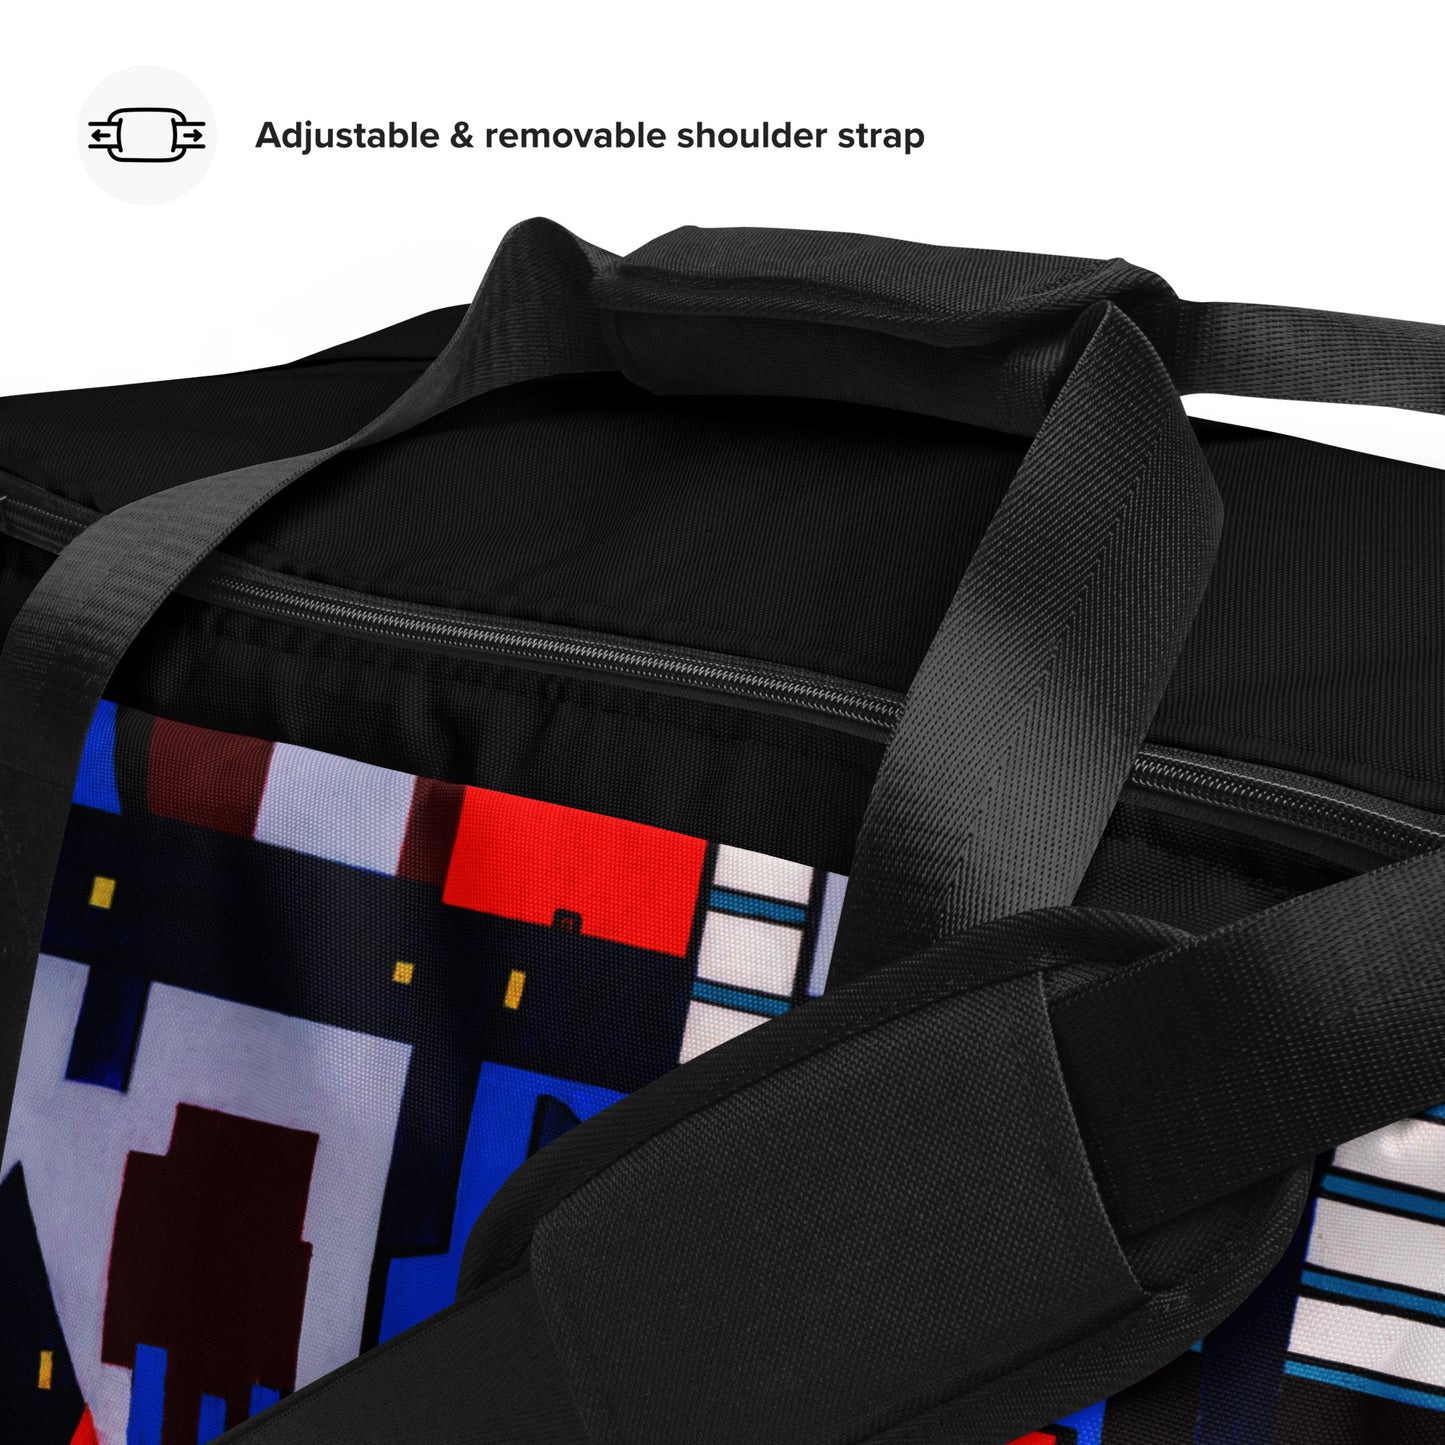 Abstract City-  Duffle bag